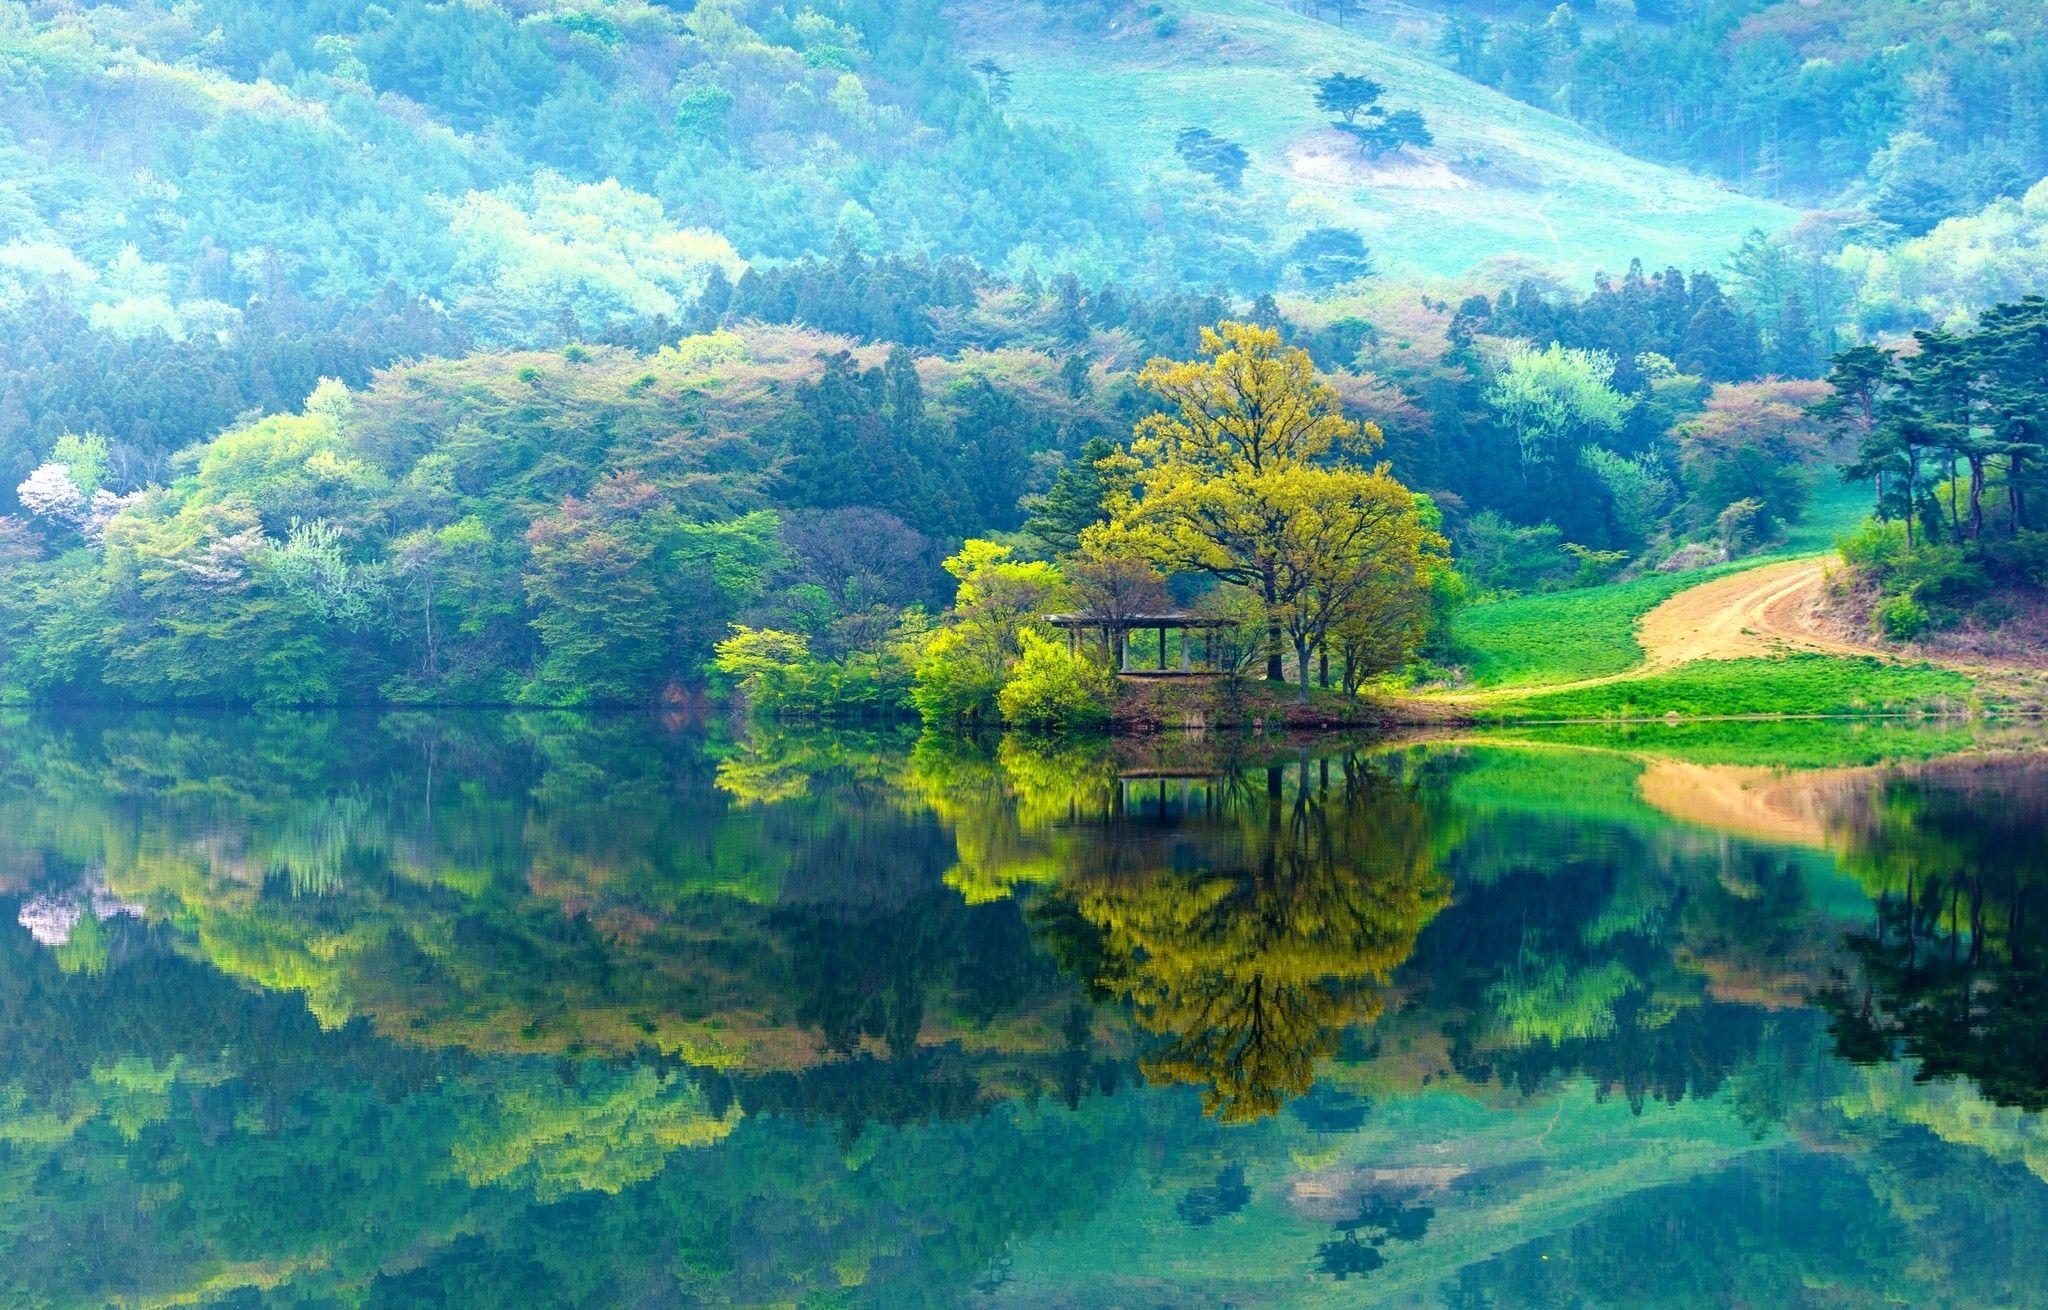  South  Korea  Landscape  Wallpapers Top Free South  Korea  